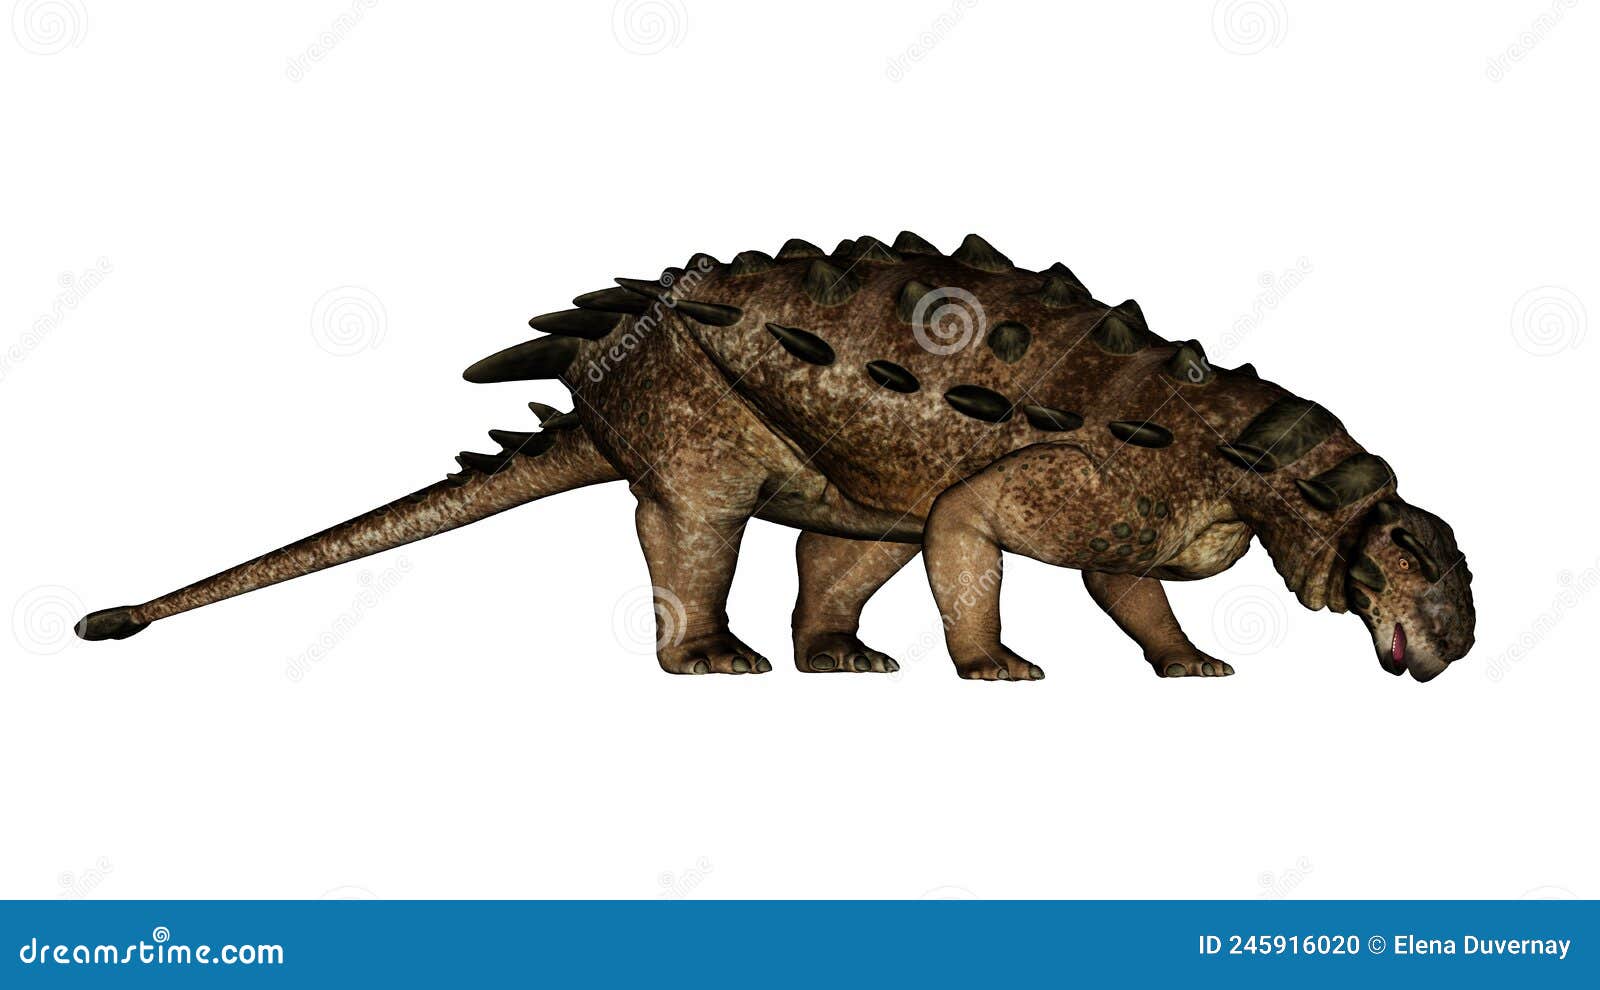 pinacosaurus dinosaur eating or drinking - 3d render